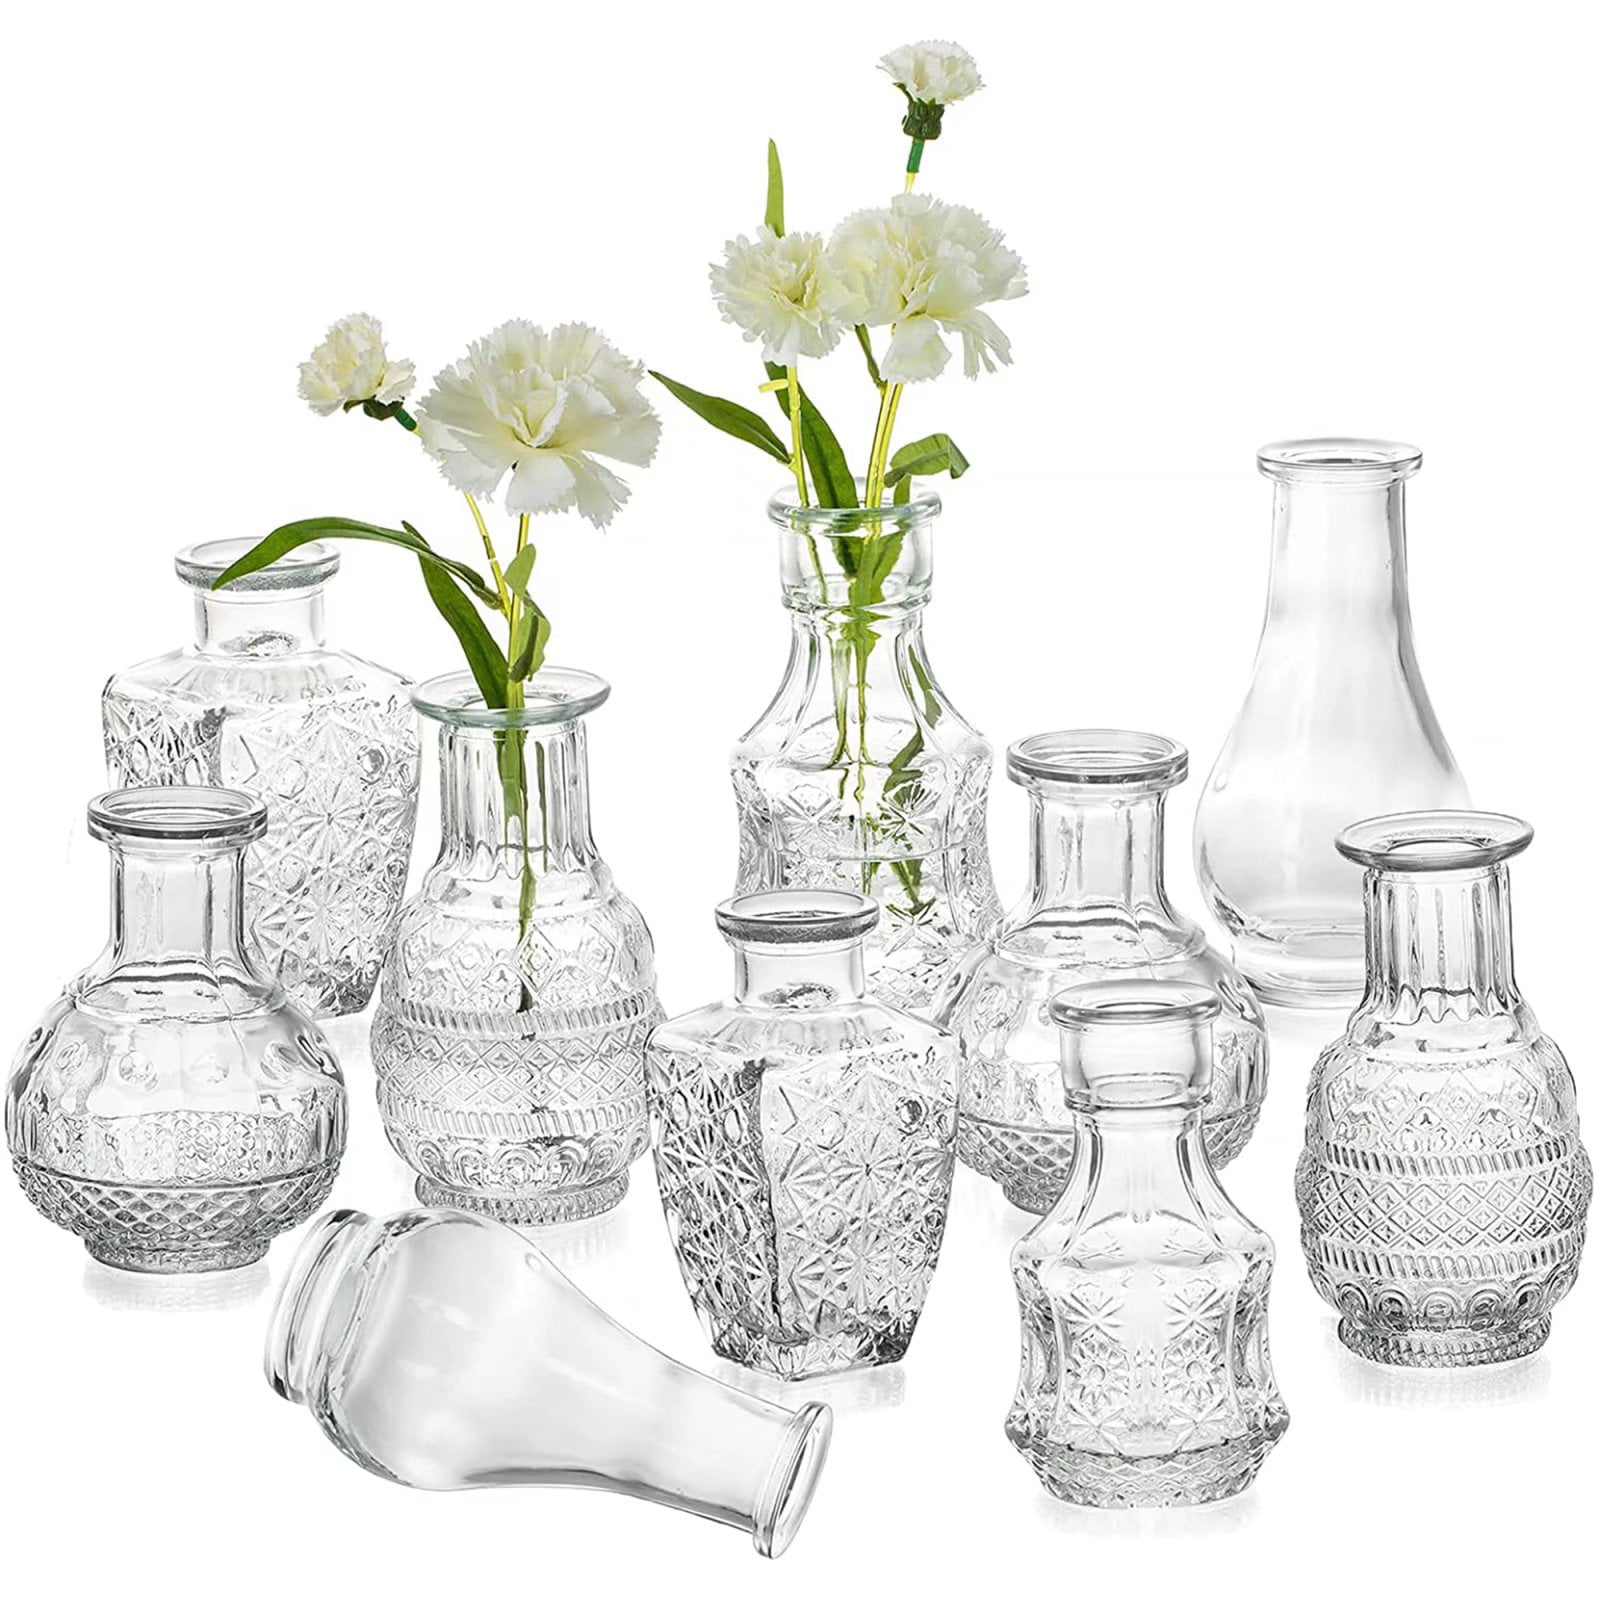 10 x Glass Bud Vases 